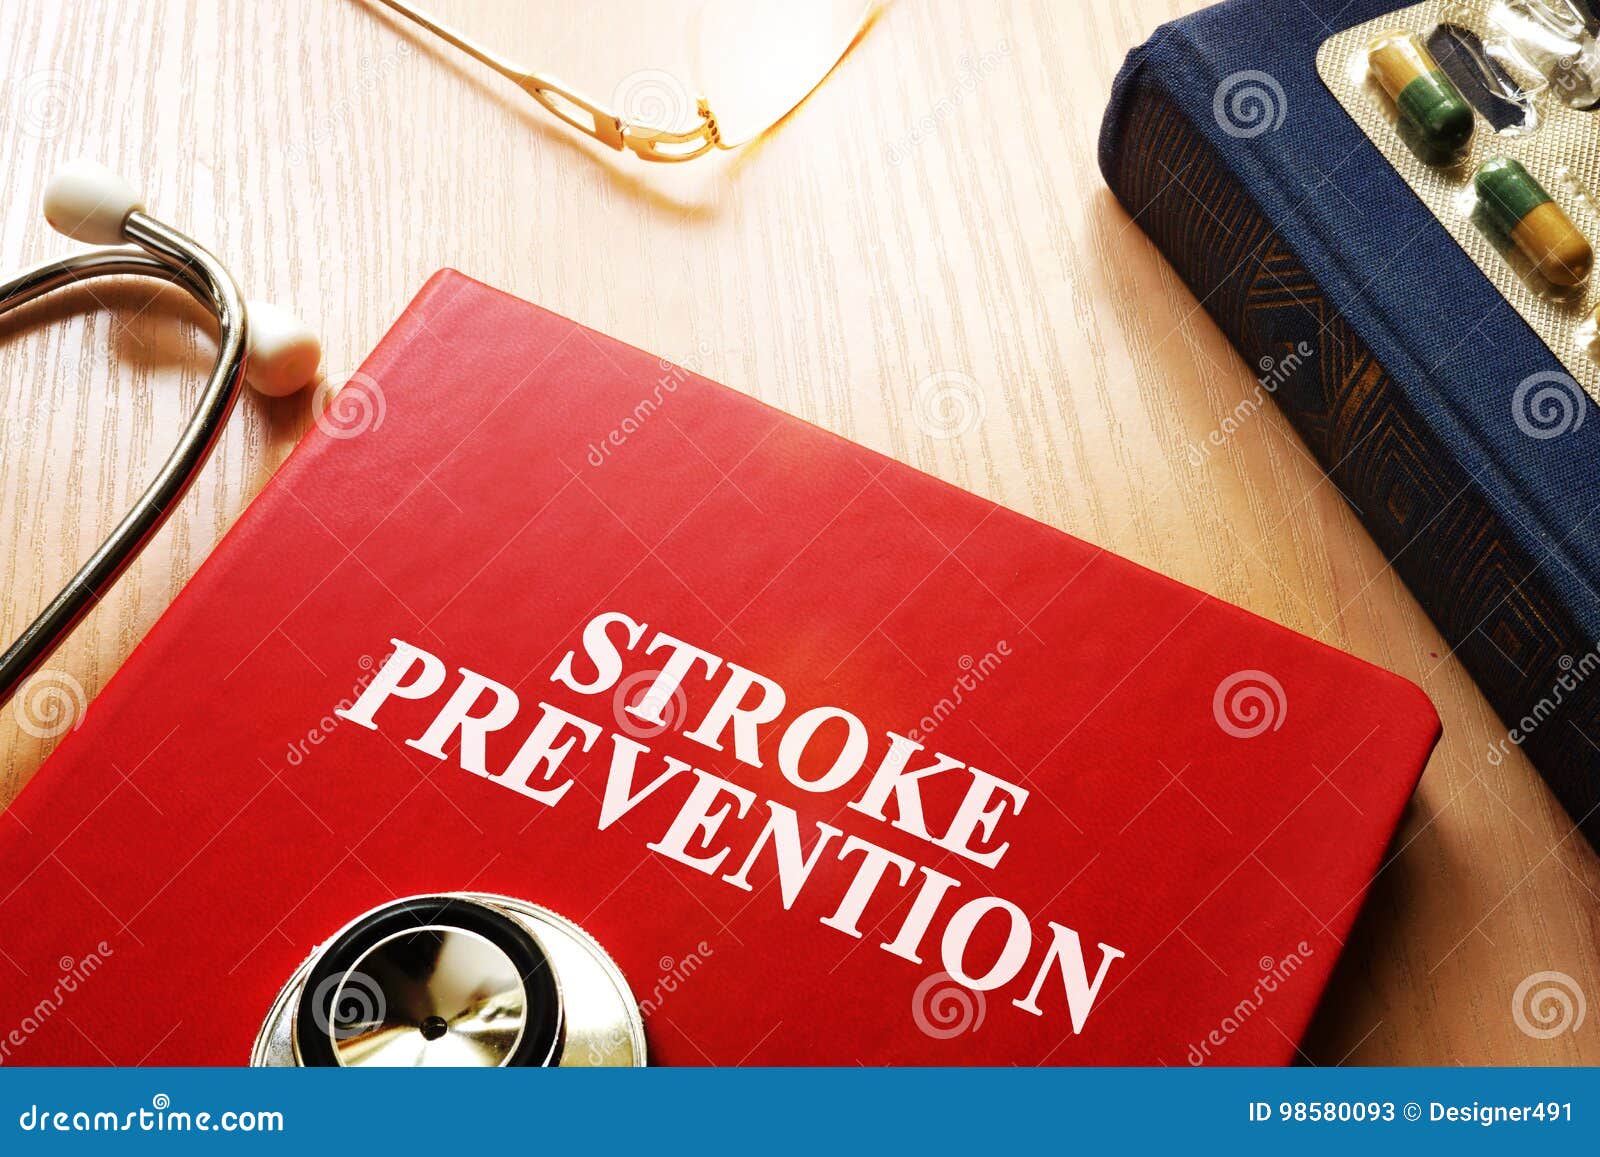 stroke prevention written on a book.